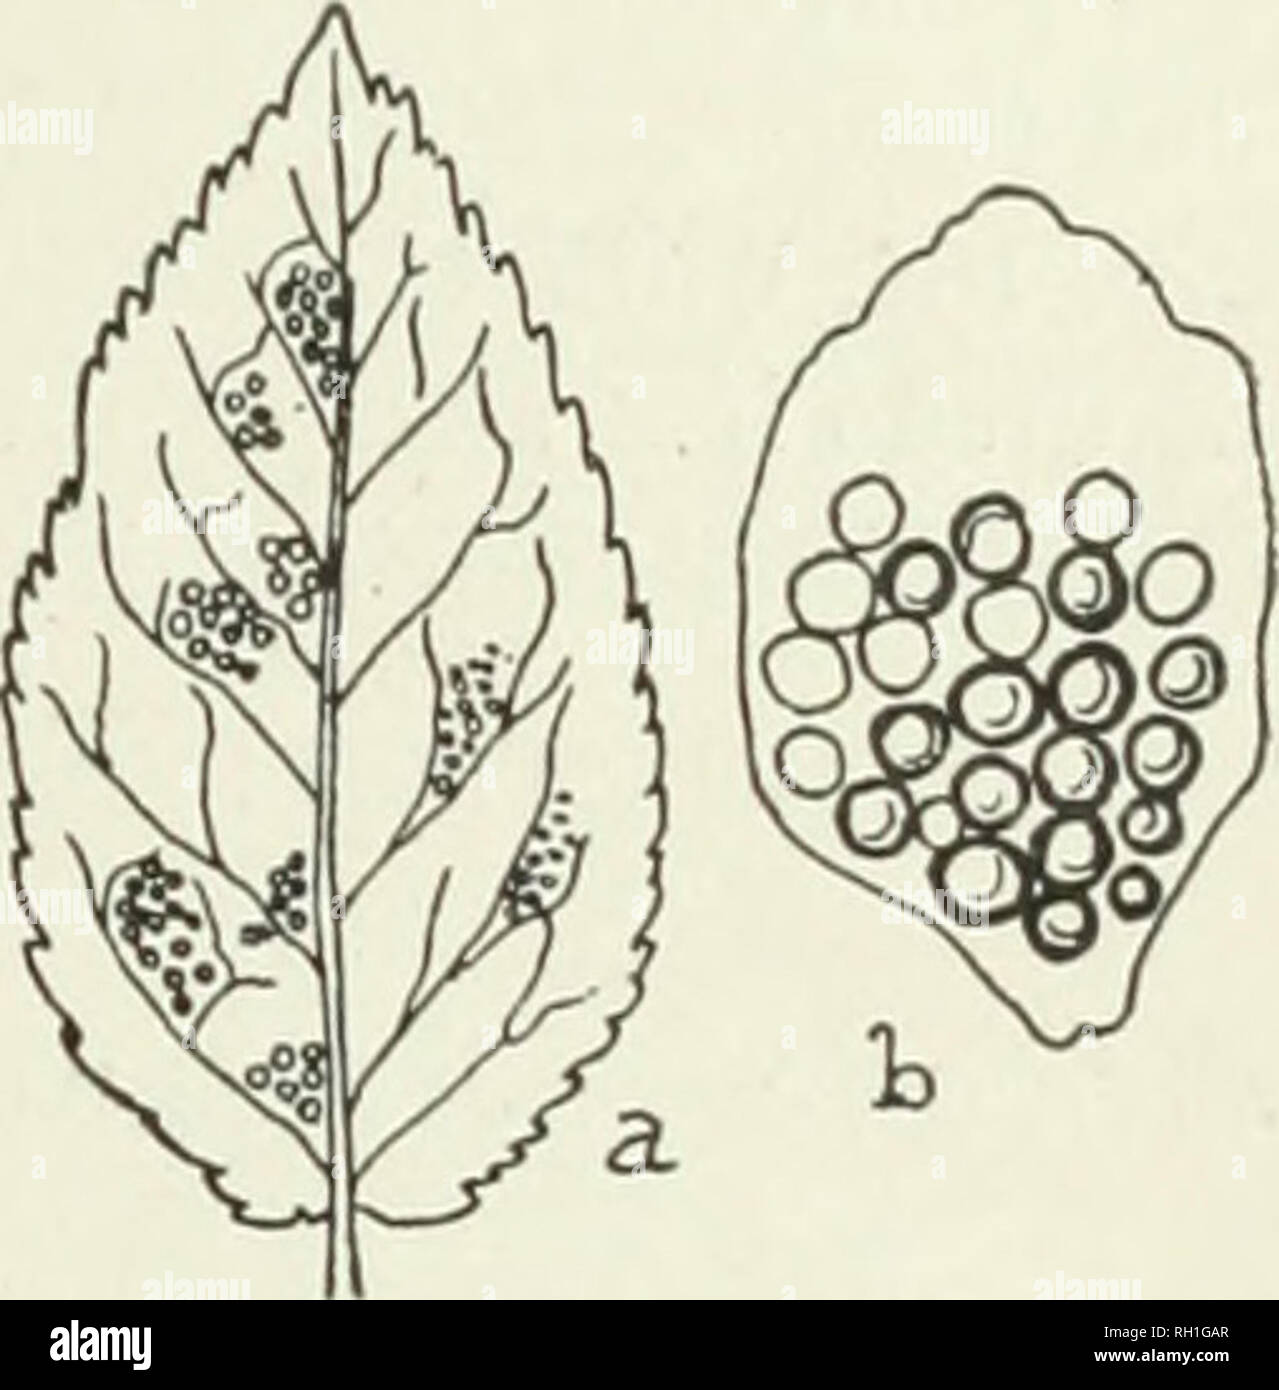 . The British rust fungi (Uredinales), their biology and classification. Uredineae. THECOPSORA 309 Uredo Padi K. et S. exsicc. 187. Cooke, Handb. p. 527. U. porphyrogenita Kze. ; Cooke, Micr. Fung. p. 216. Melampsora Padi Cooke, Handb. p. 523 (1871). Plowr. Ured. p. 246. Fung. Fl. Yorkshire, p. 184. Pucciniastrum Padi Dietel in Eng. u. Prantl, Natlirl. Pflanz. i. 1**, p. 47. Fischer, Ured. Schweiz, p. 463, f. 303 ; Centralbl. f. Bakter. 2. xv. 227. Thecopsora areolata Magn. in Hedwigia, 1875, p. 123. Sacc. Syll. vii. 764. Whitish, pustuhir, flat, open, exhaling a covering on the upper. Sper mo Stock Photo